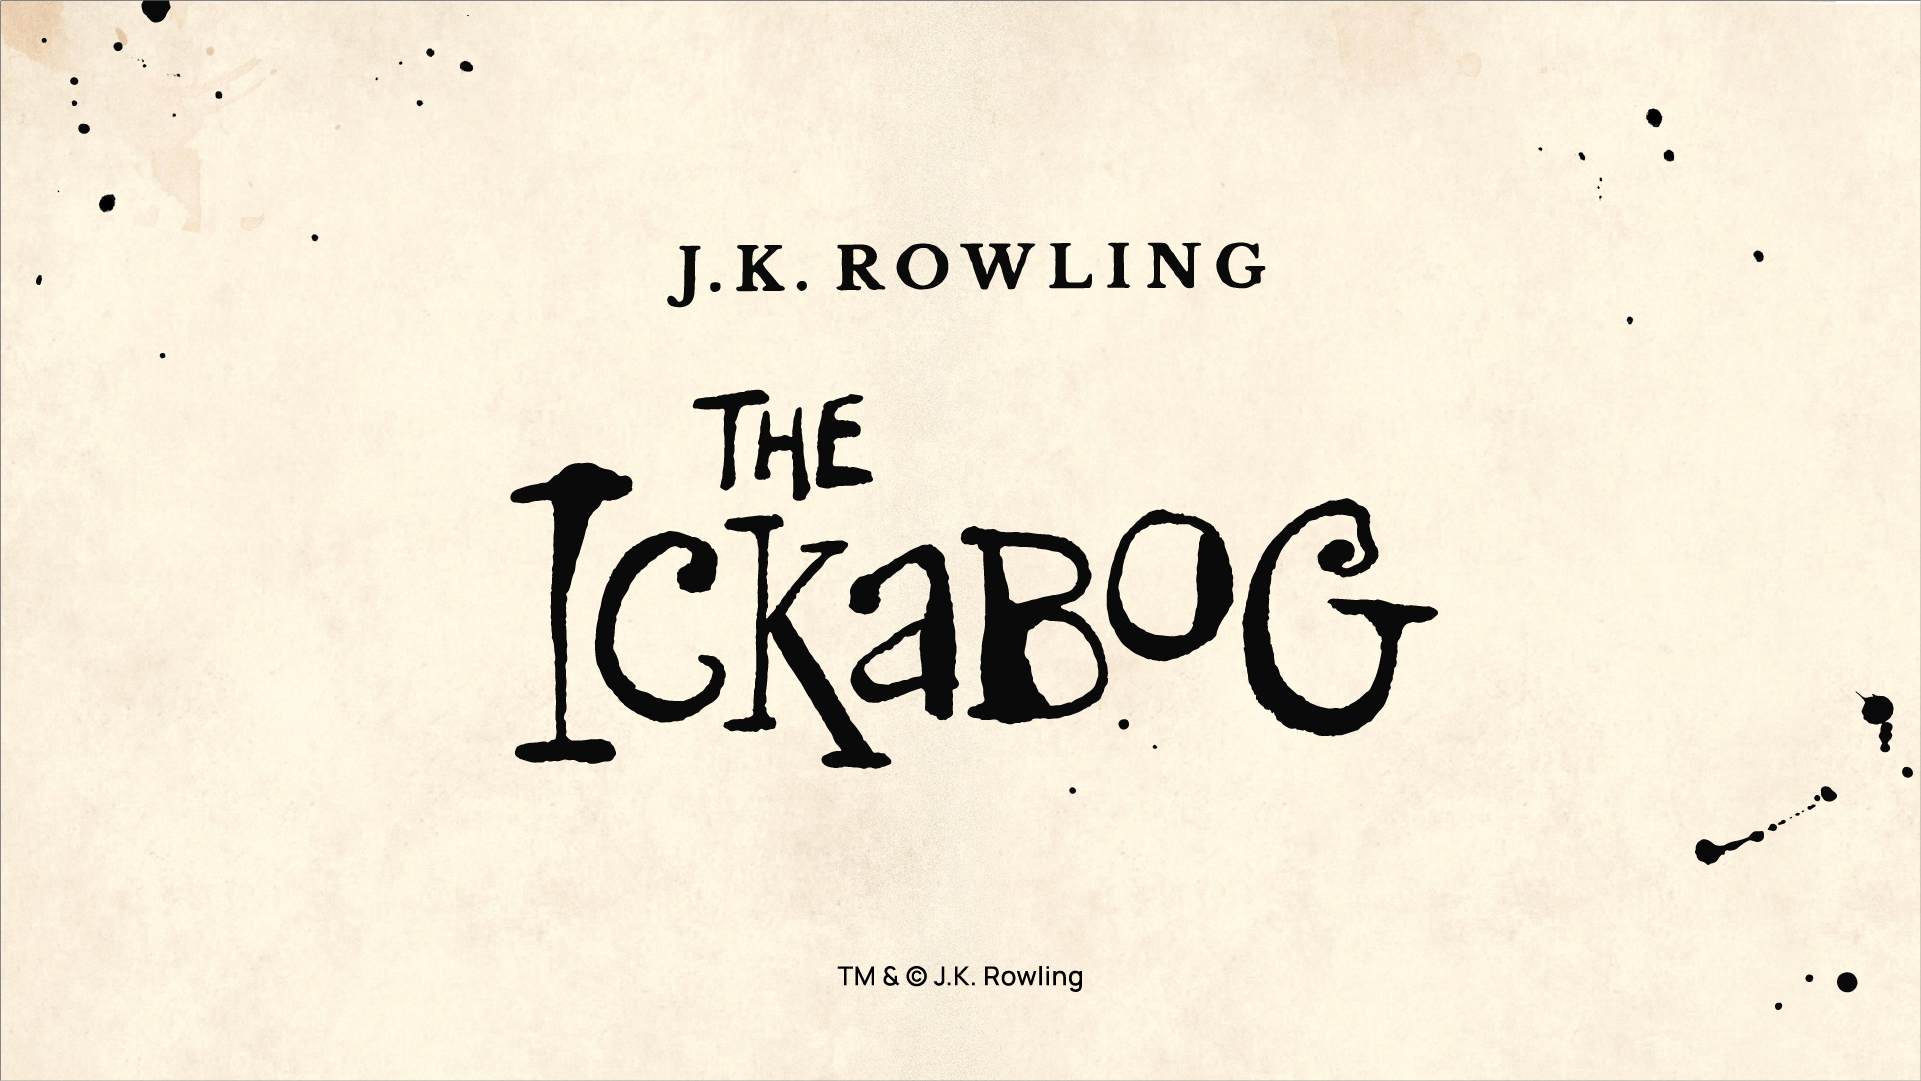 J.K. Rowling "The Ickabog